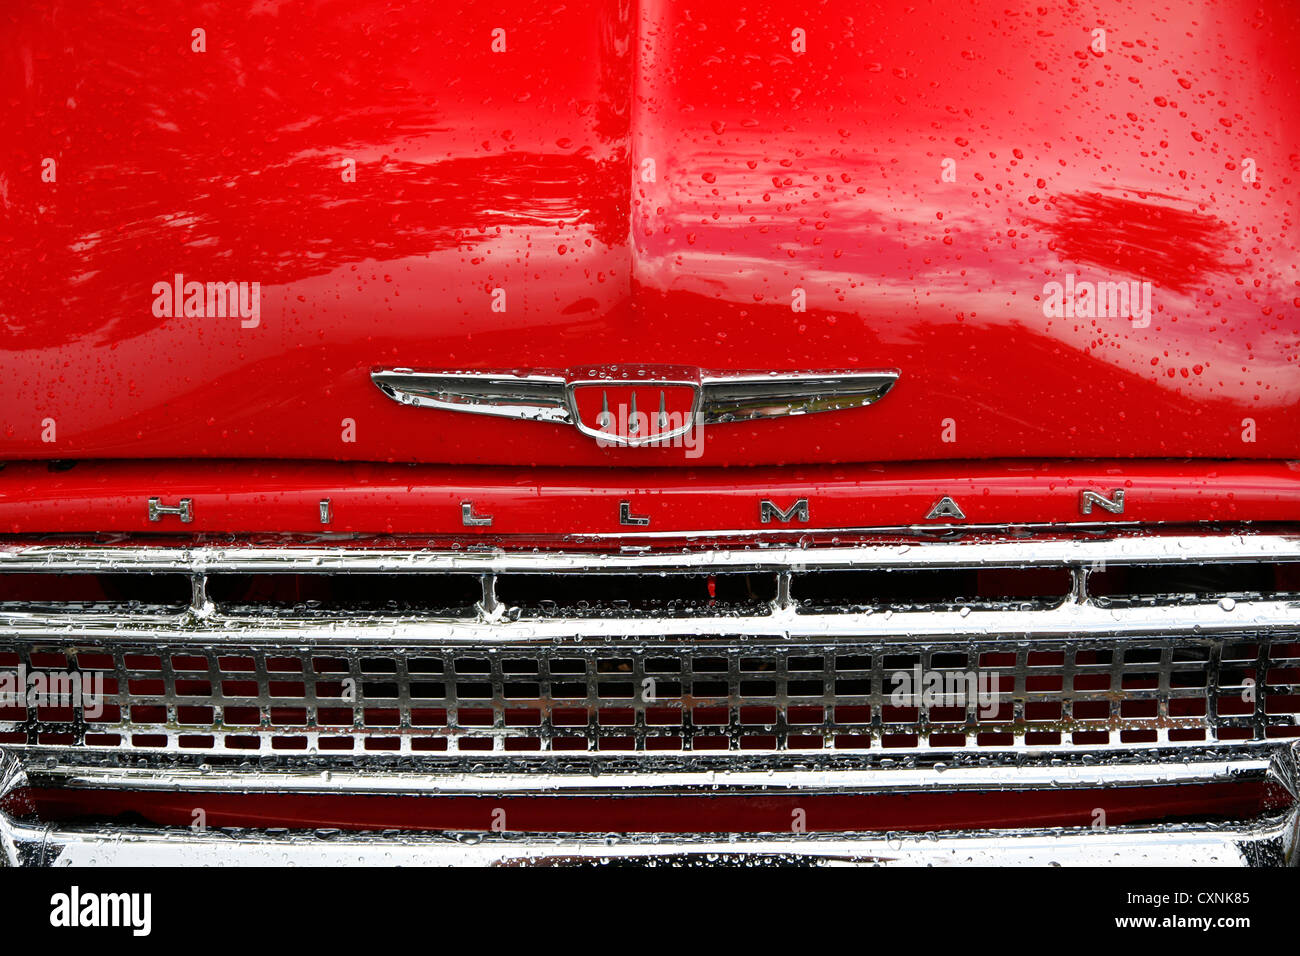 Red Hillman Minx Classic Car close up shot Stock Photo